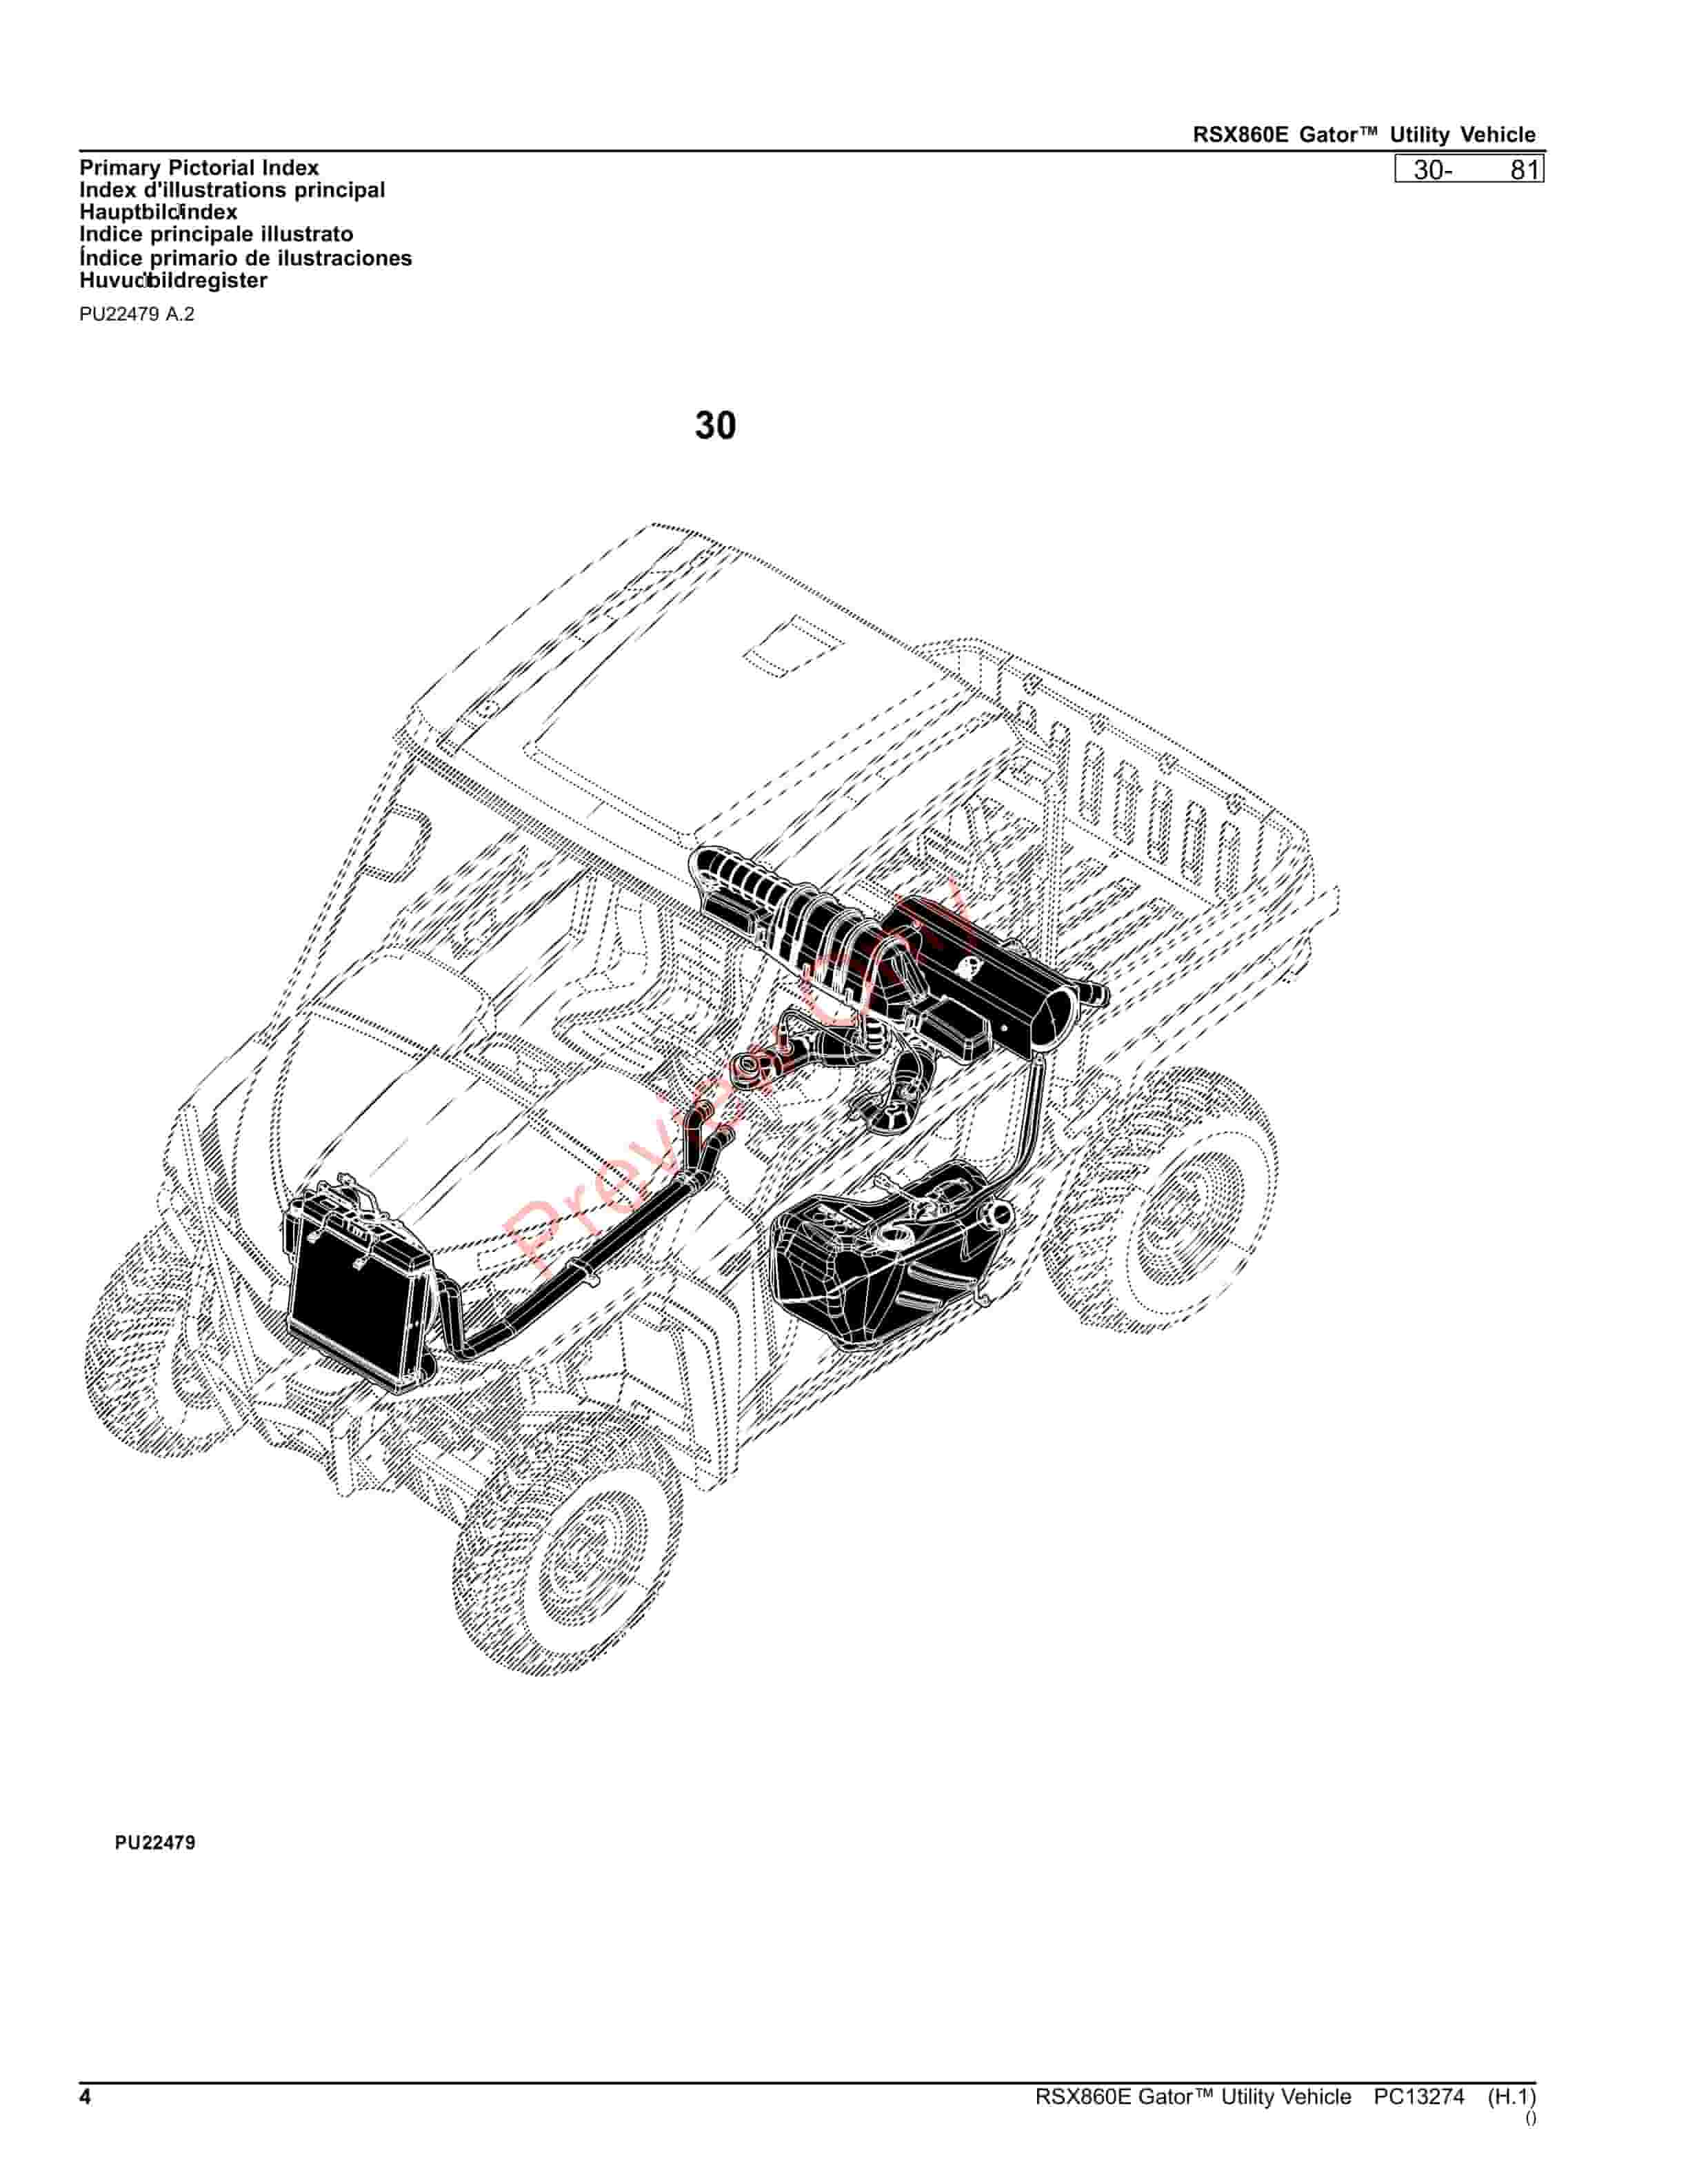 John Deere RSX860E Gator Utility Vehicle Parts Catalog PC13274 14SEP23-4